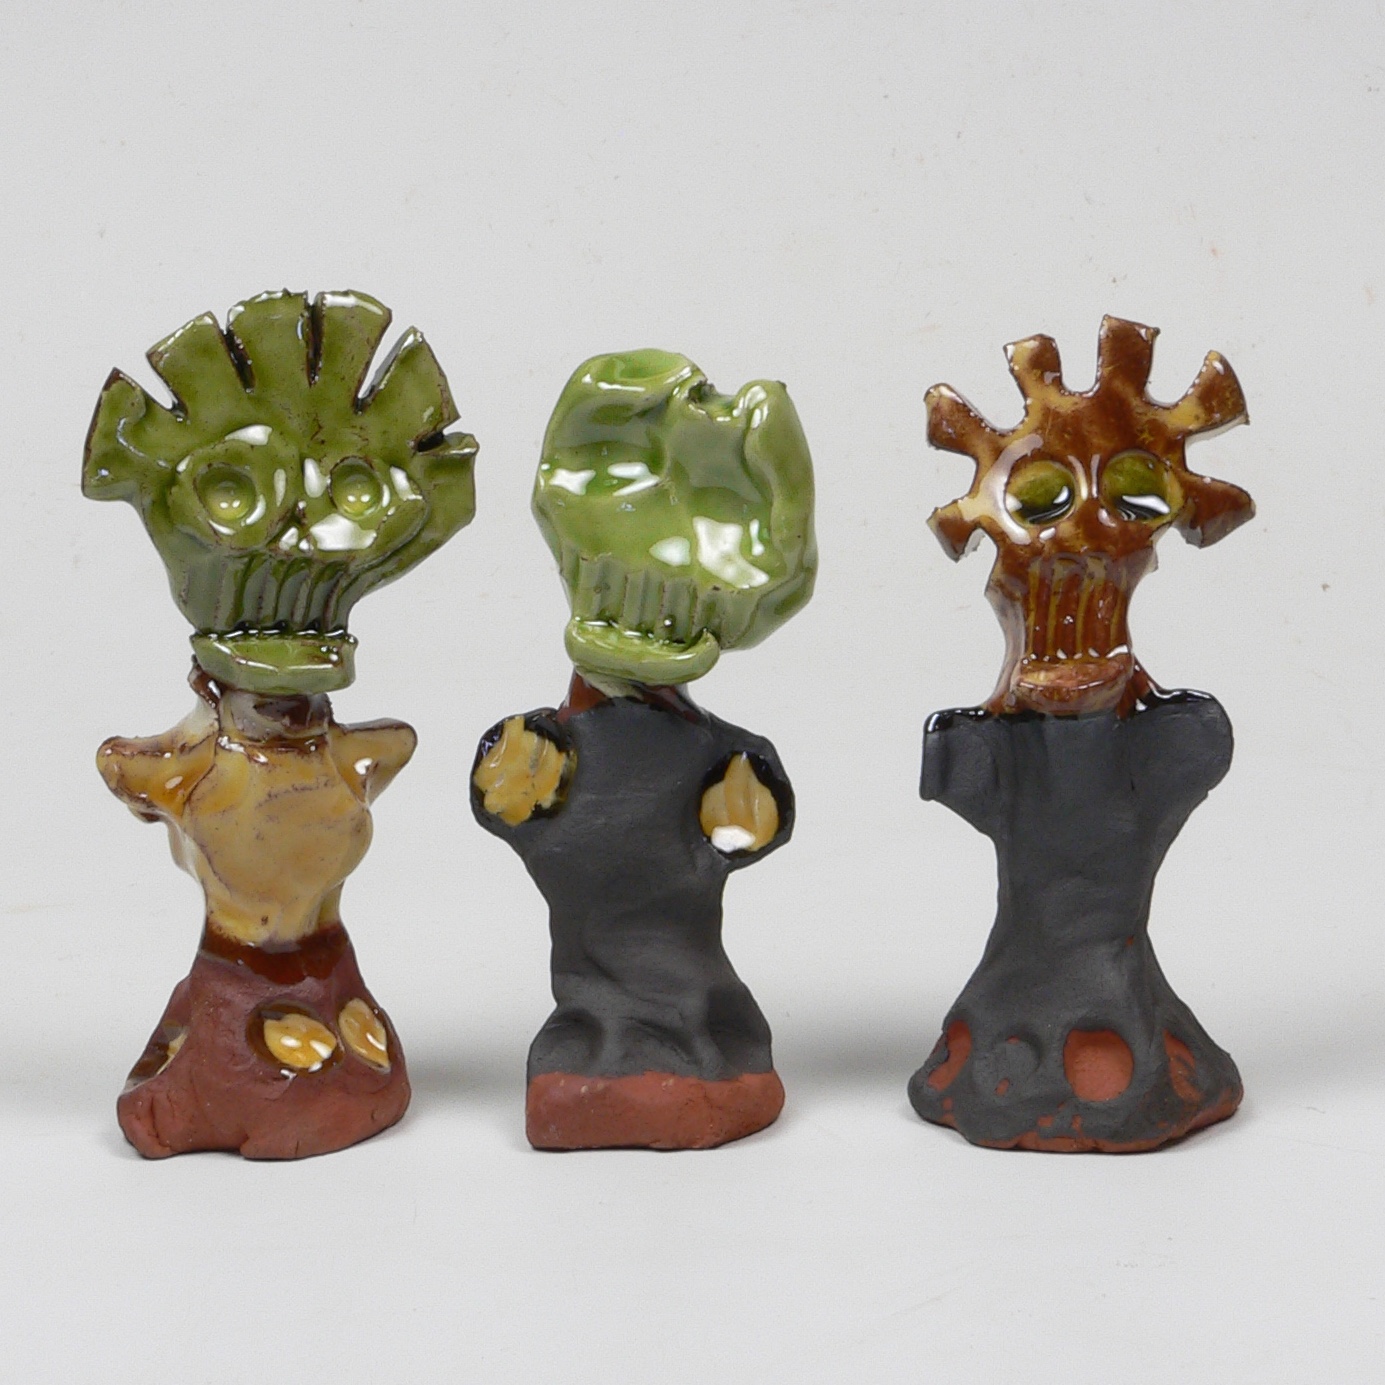 Cambridge Ceramics Website for New work. Online now.